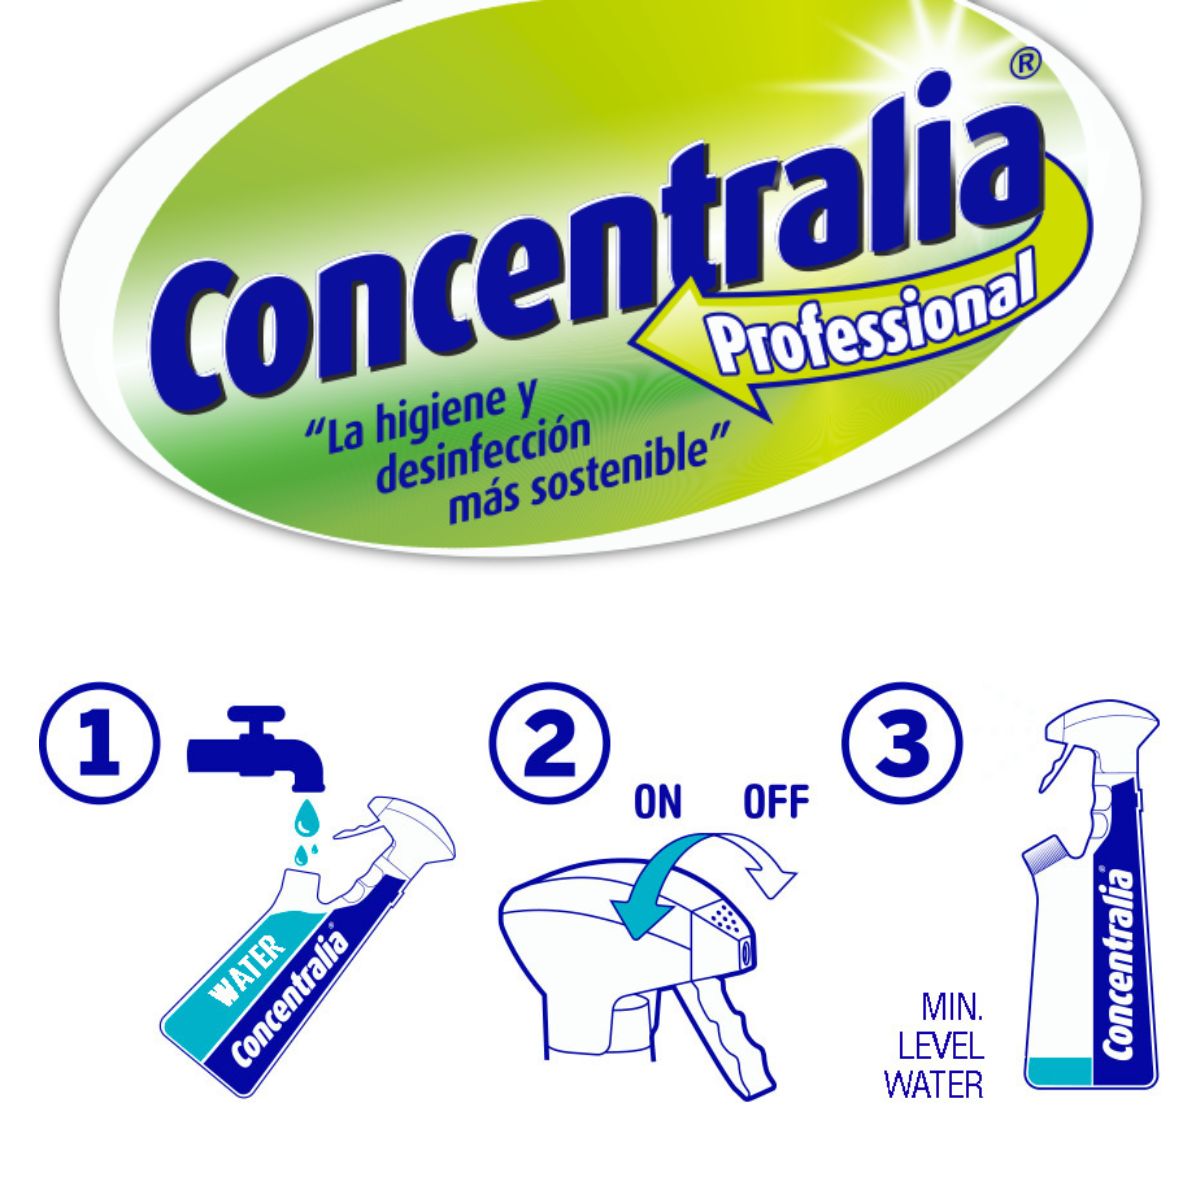 Concentralia Ecofoam Igienizant cu Bioalcool - 425 ml - CleanStore